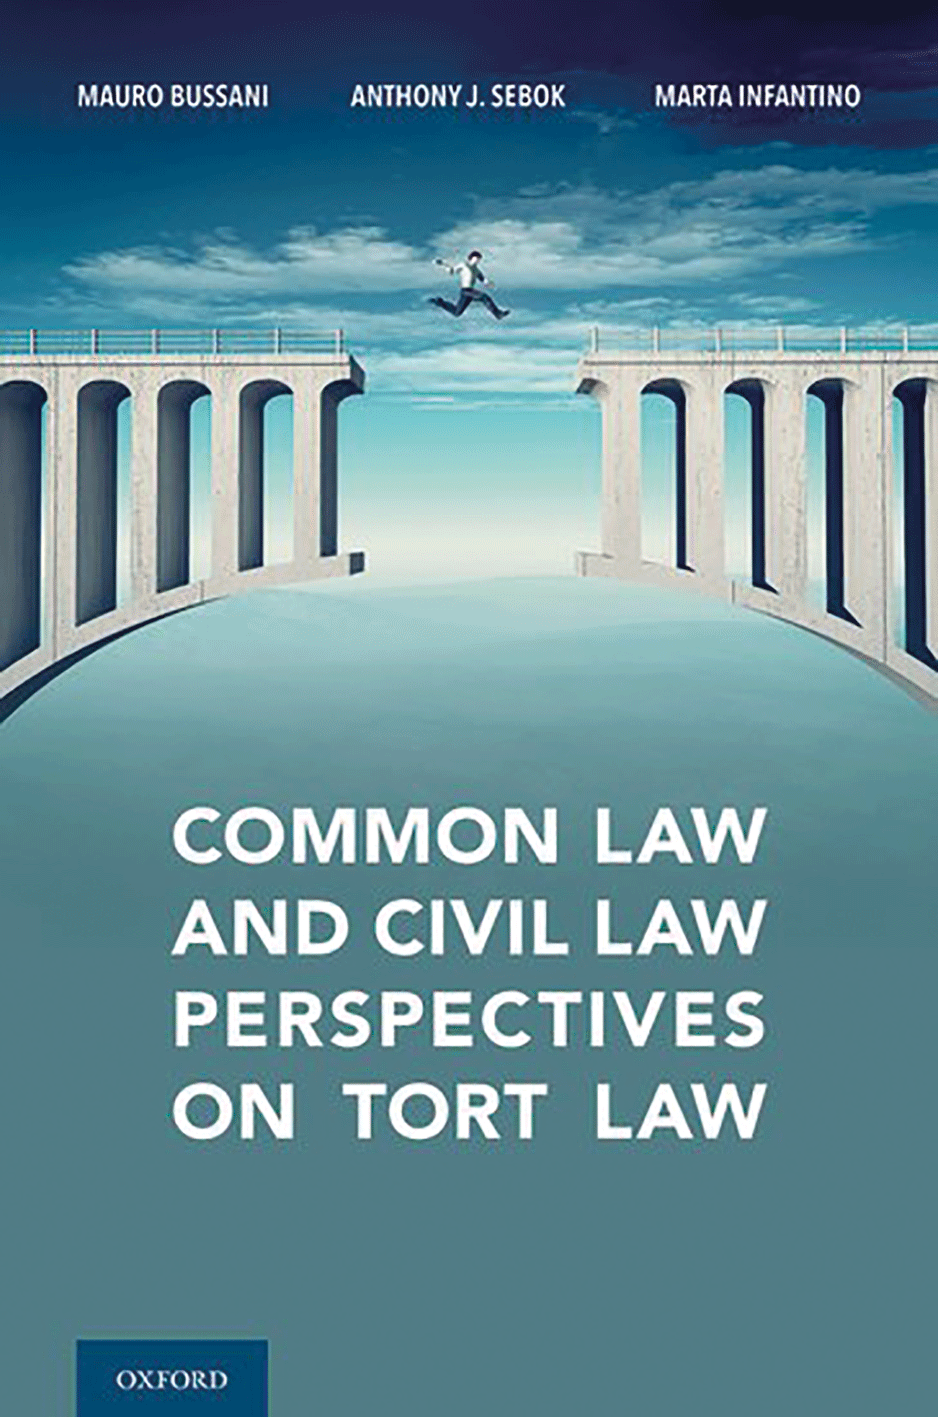 Common-law-tort